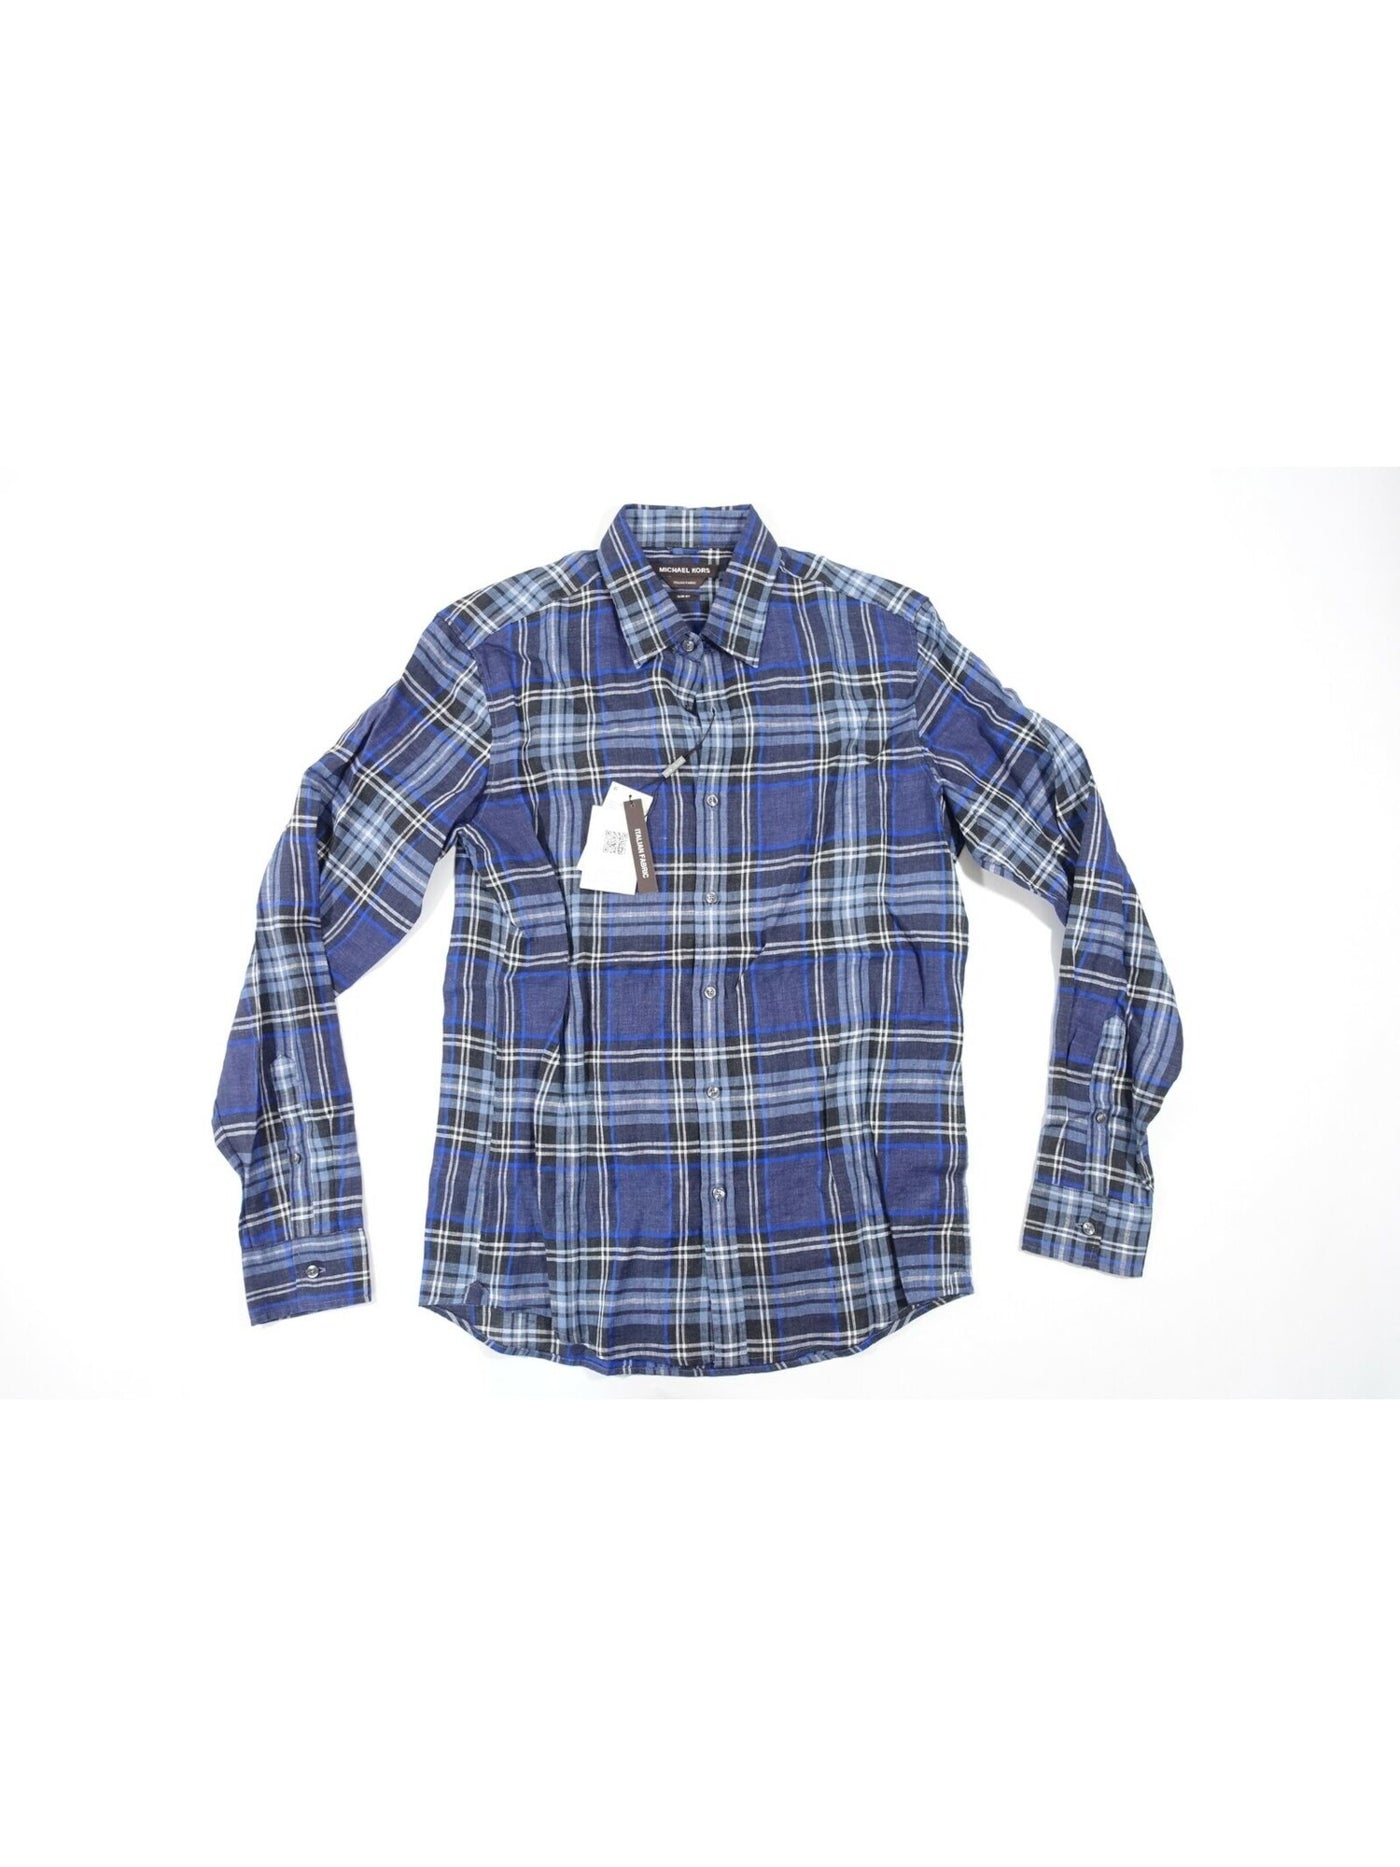 MICHAEL KORS Mens Blue Plaid Long Sleeve Collared Slim Fit Button Down Shirt M